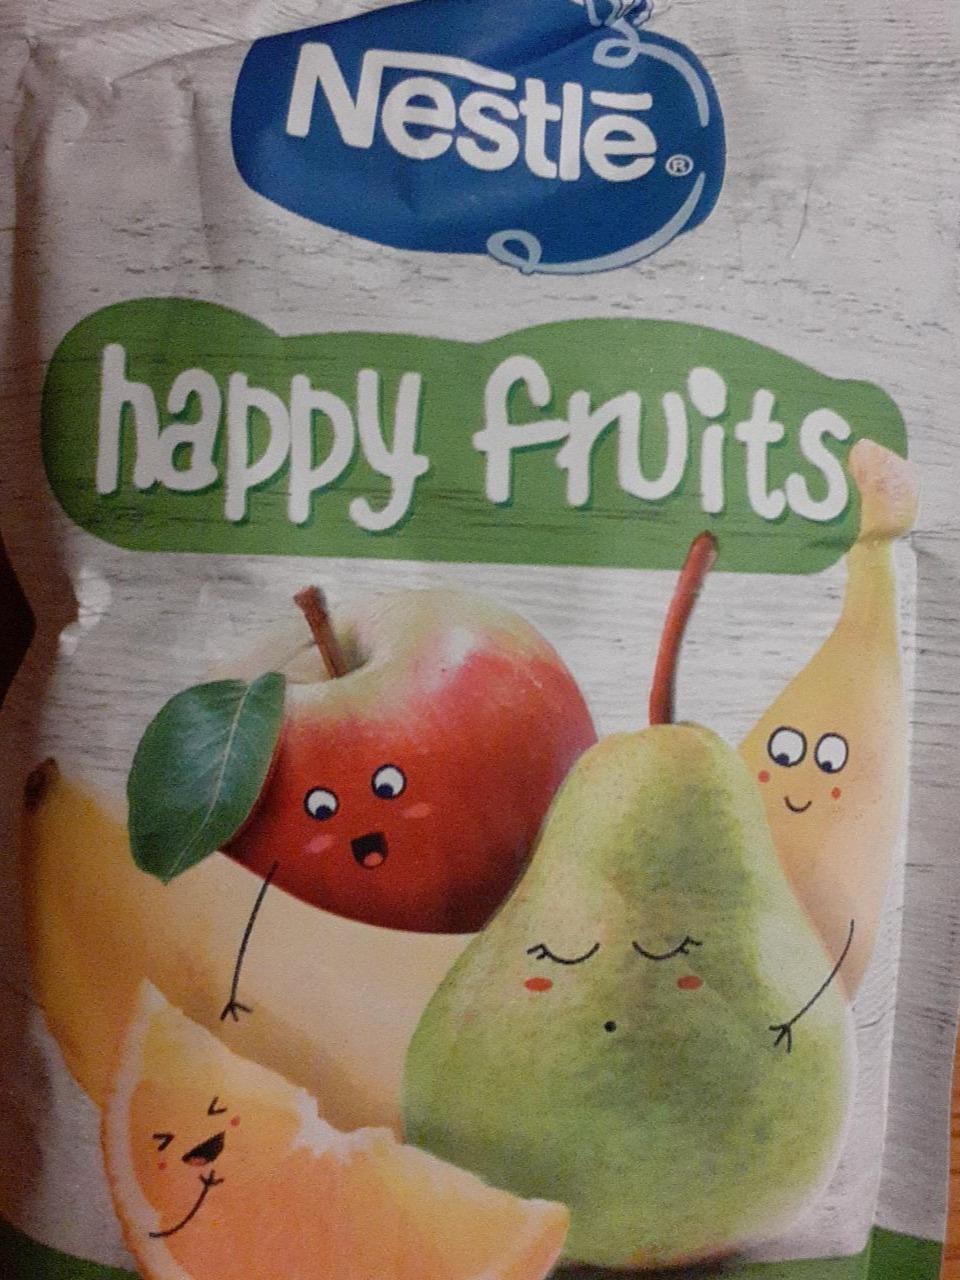 Fotografie - happy frutas Nestlé